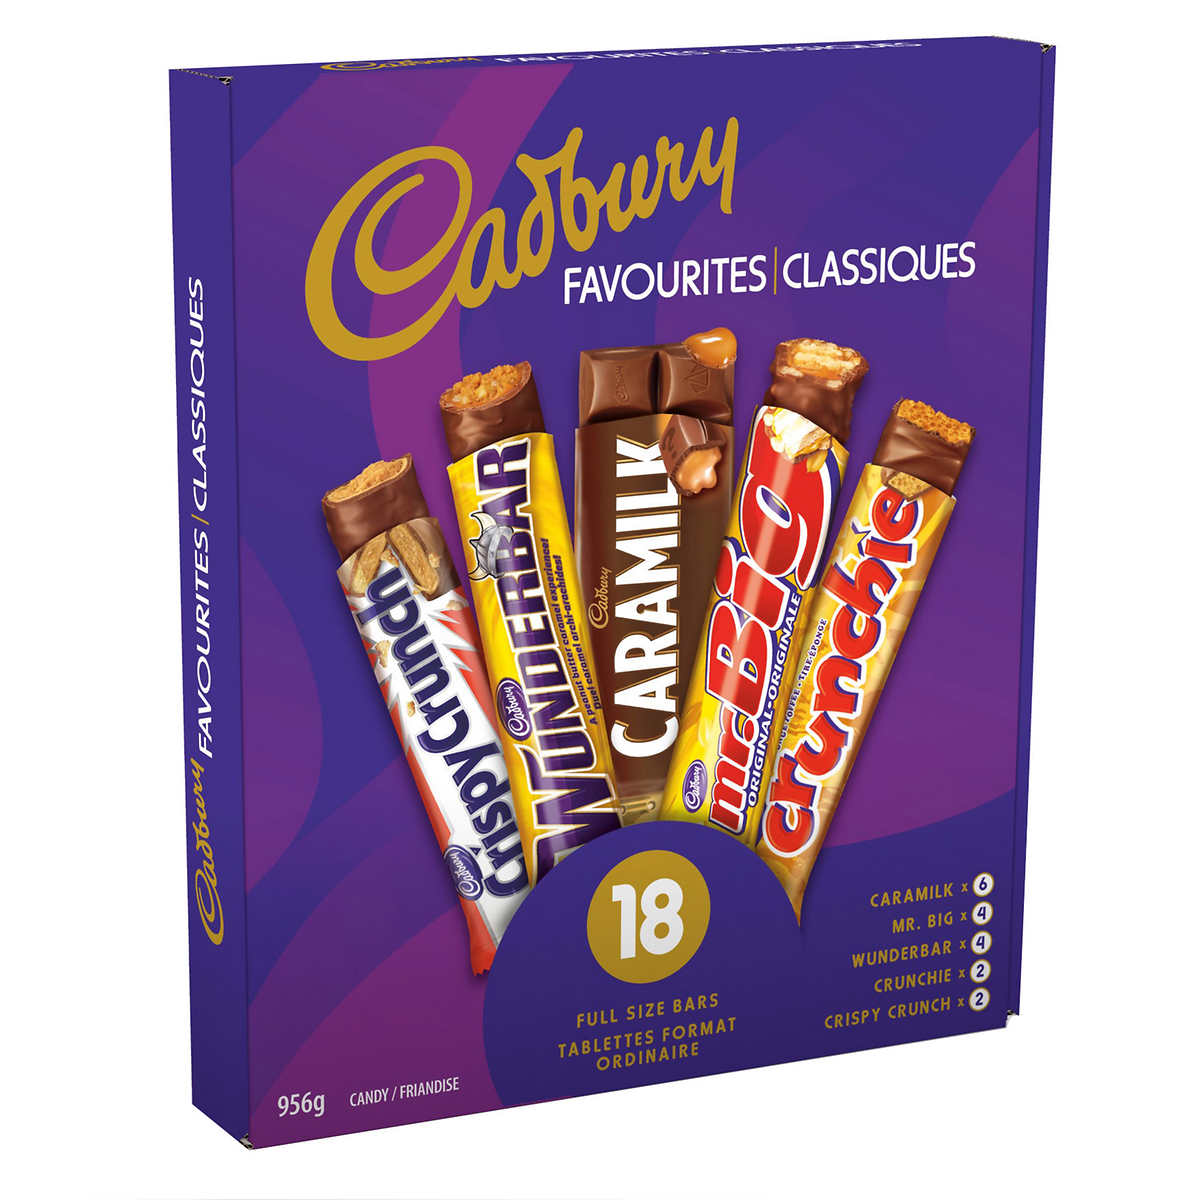 Cadbury Chocolate Bar Variety 18 Count Costco